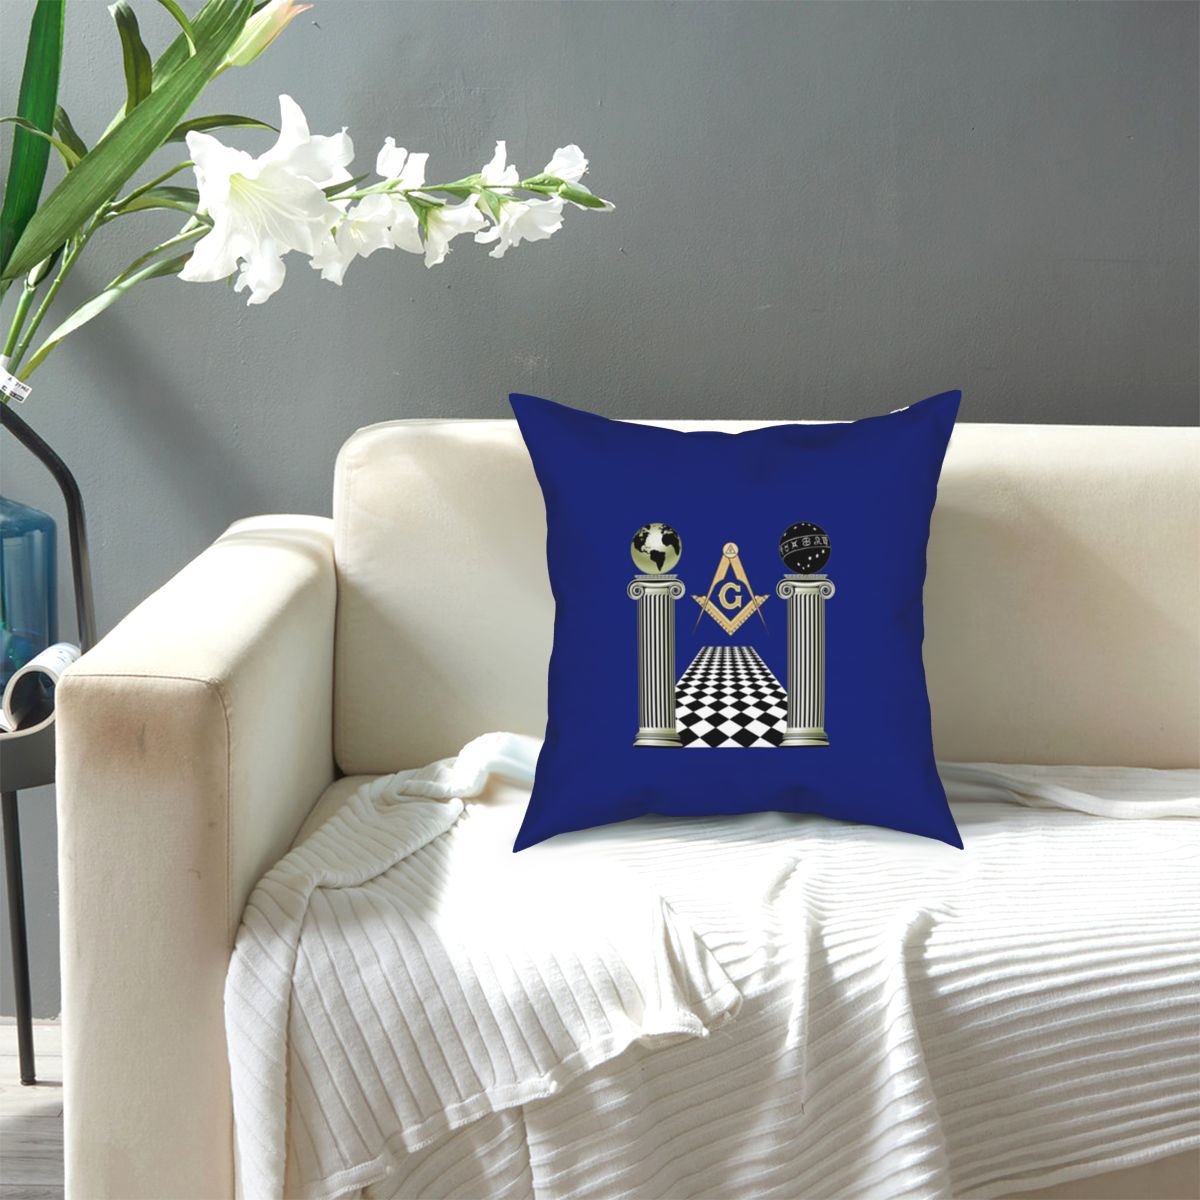 Master Mason Blue Lodge Pillowcase - Compass And Square Solomon's Temple Blue - Bricks Masons